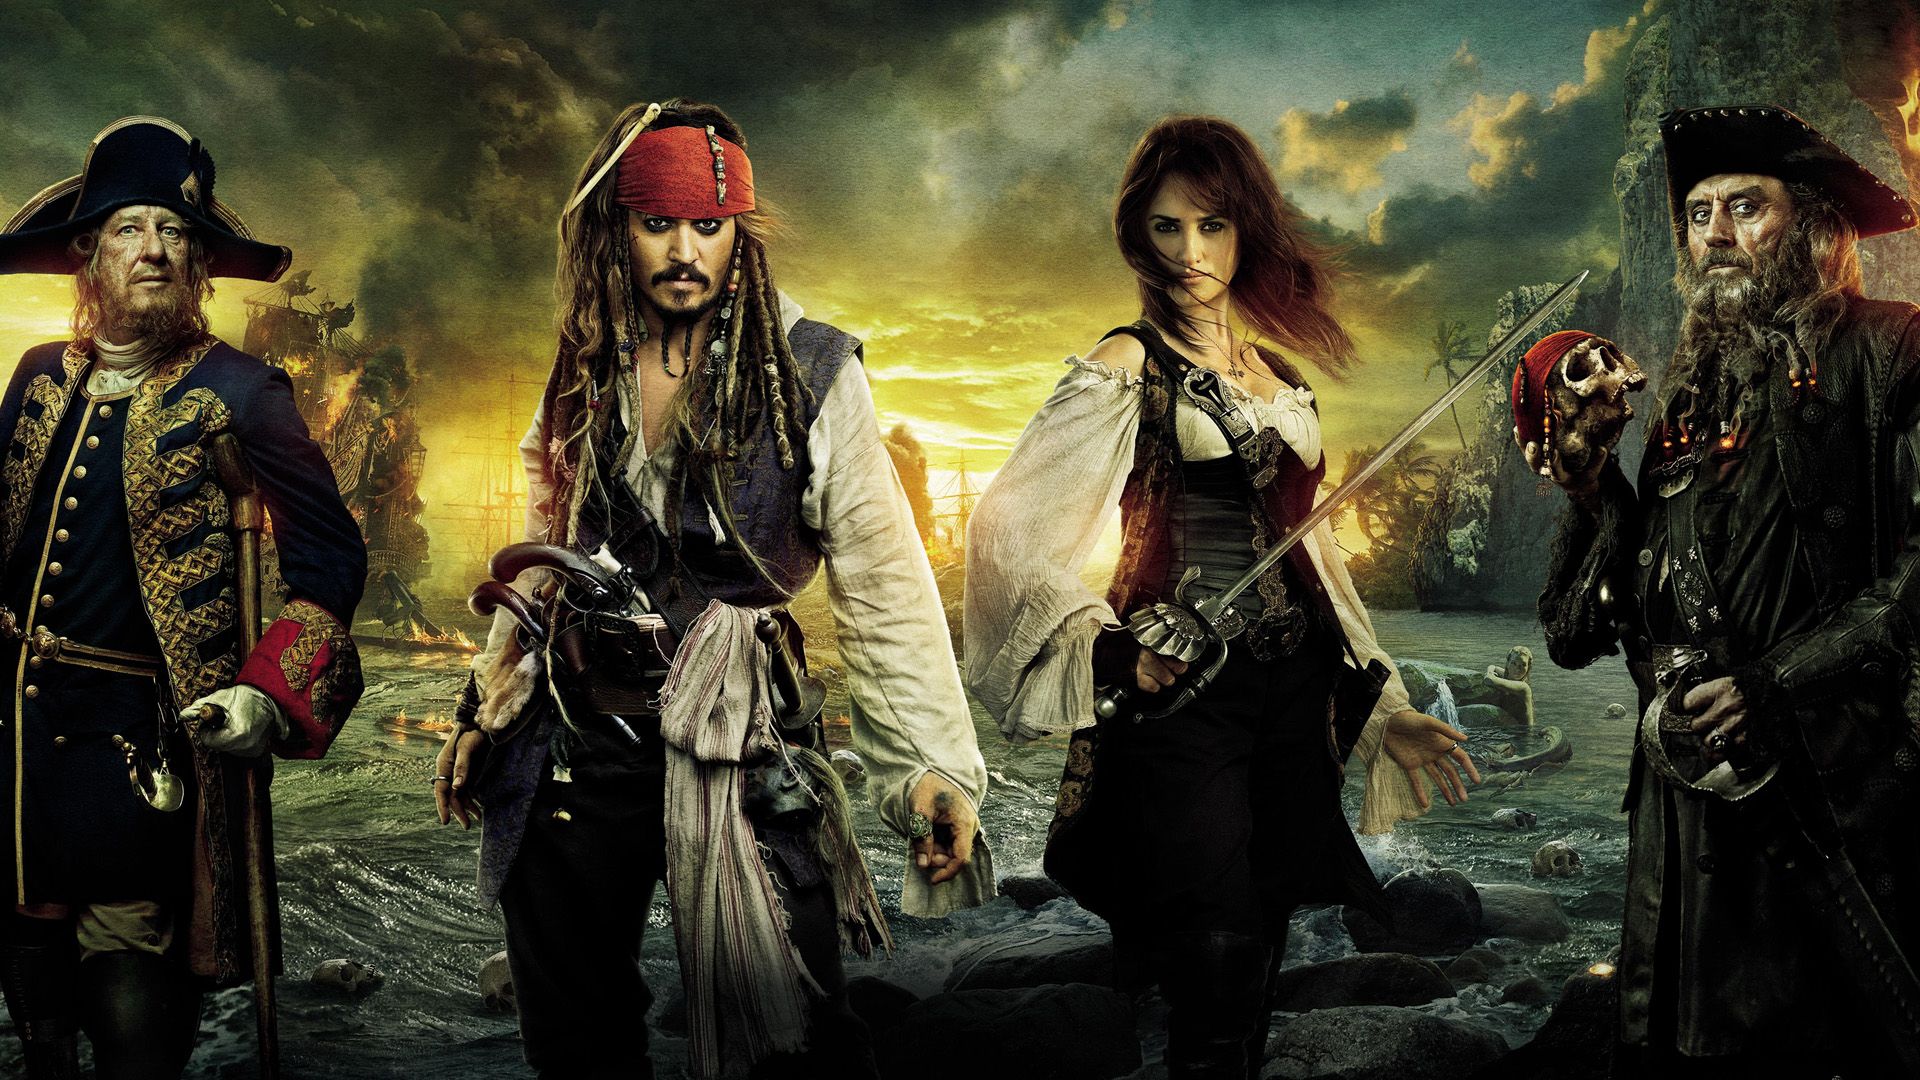 Pirates of the Caribbean: On Stranger Tides background